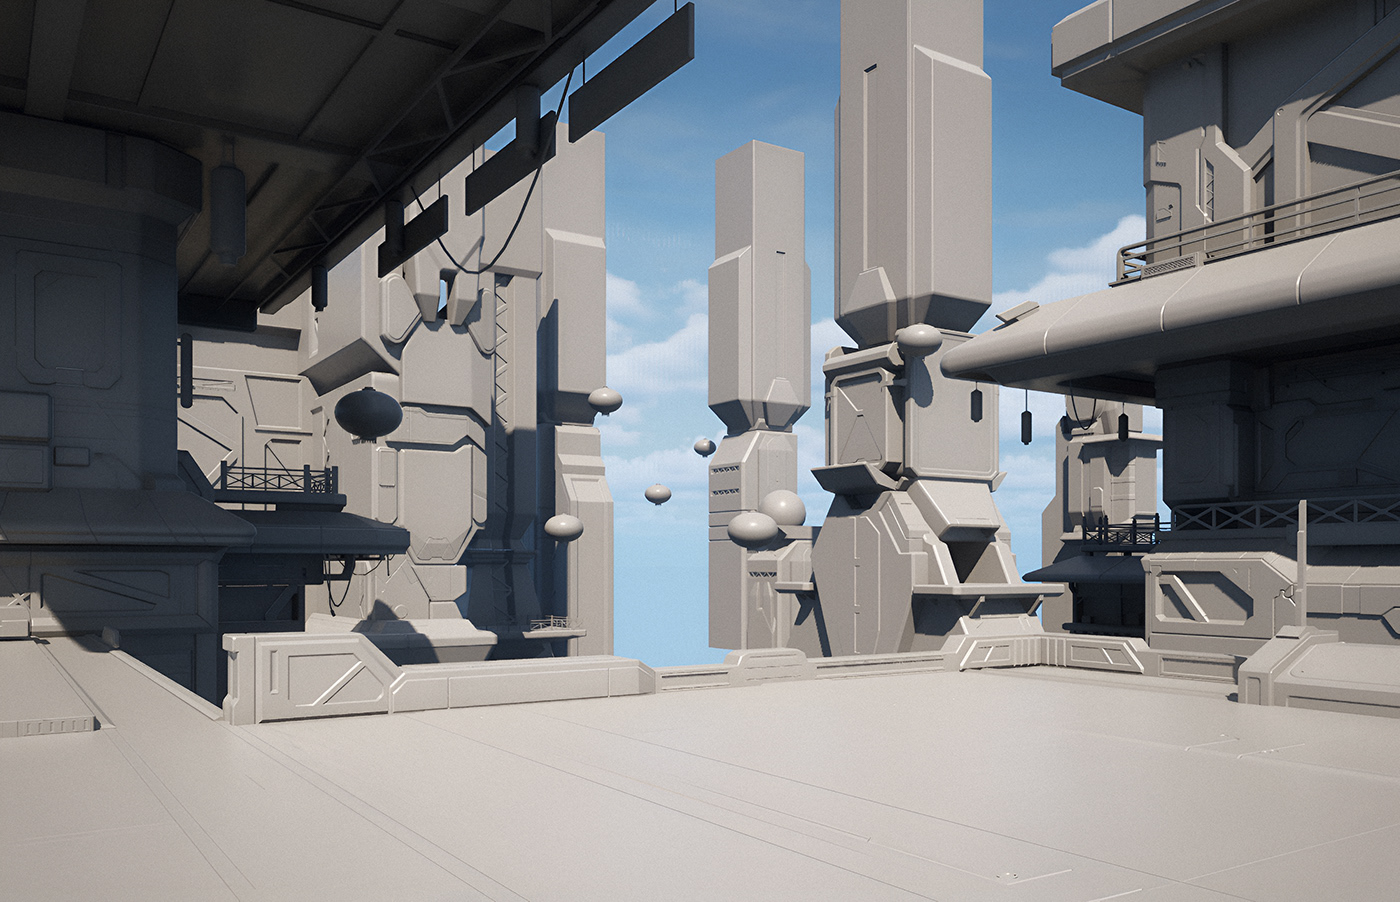 Scifi Unreal Engine Unreal Engine 5 3D Render game city futuristic Cyberpunk неон